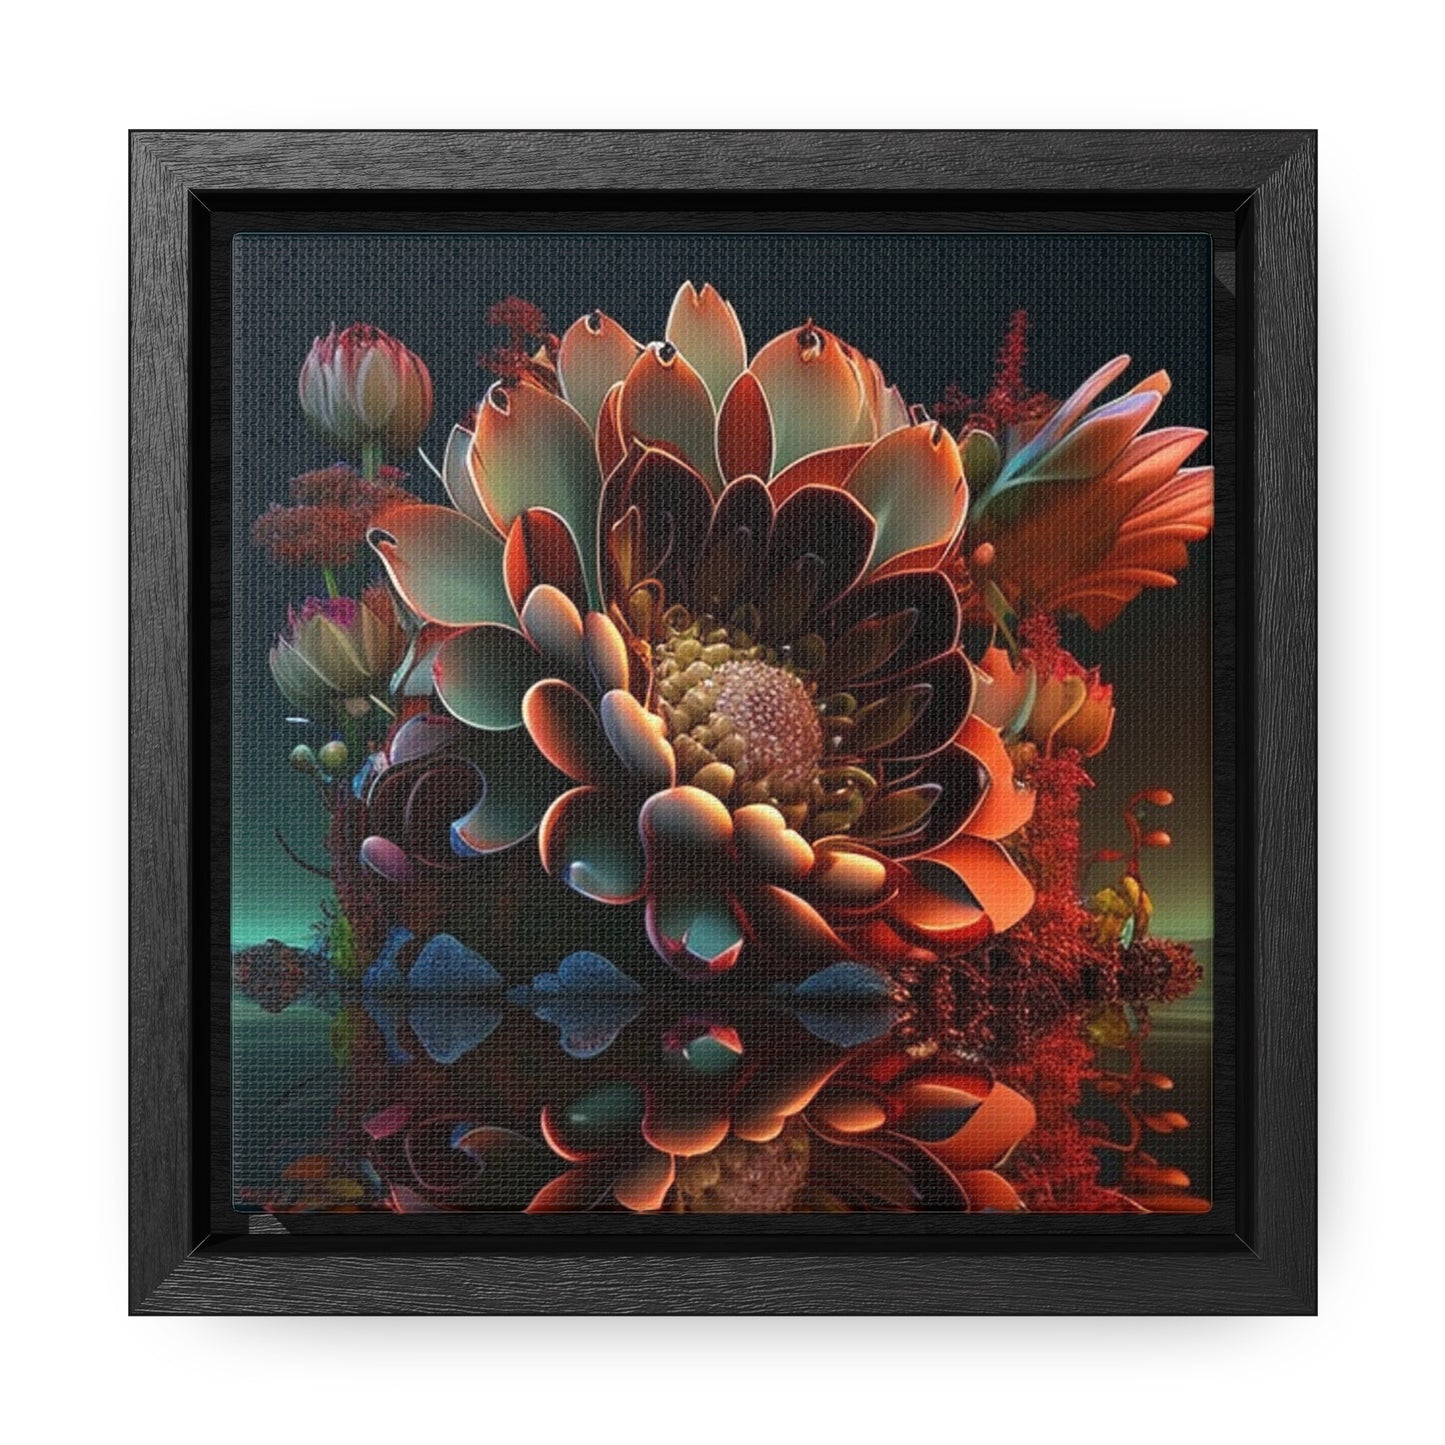 Gallery Canvas Wraps, Square Frame Flower Arangment 4